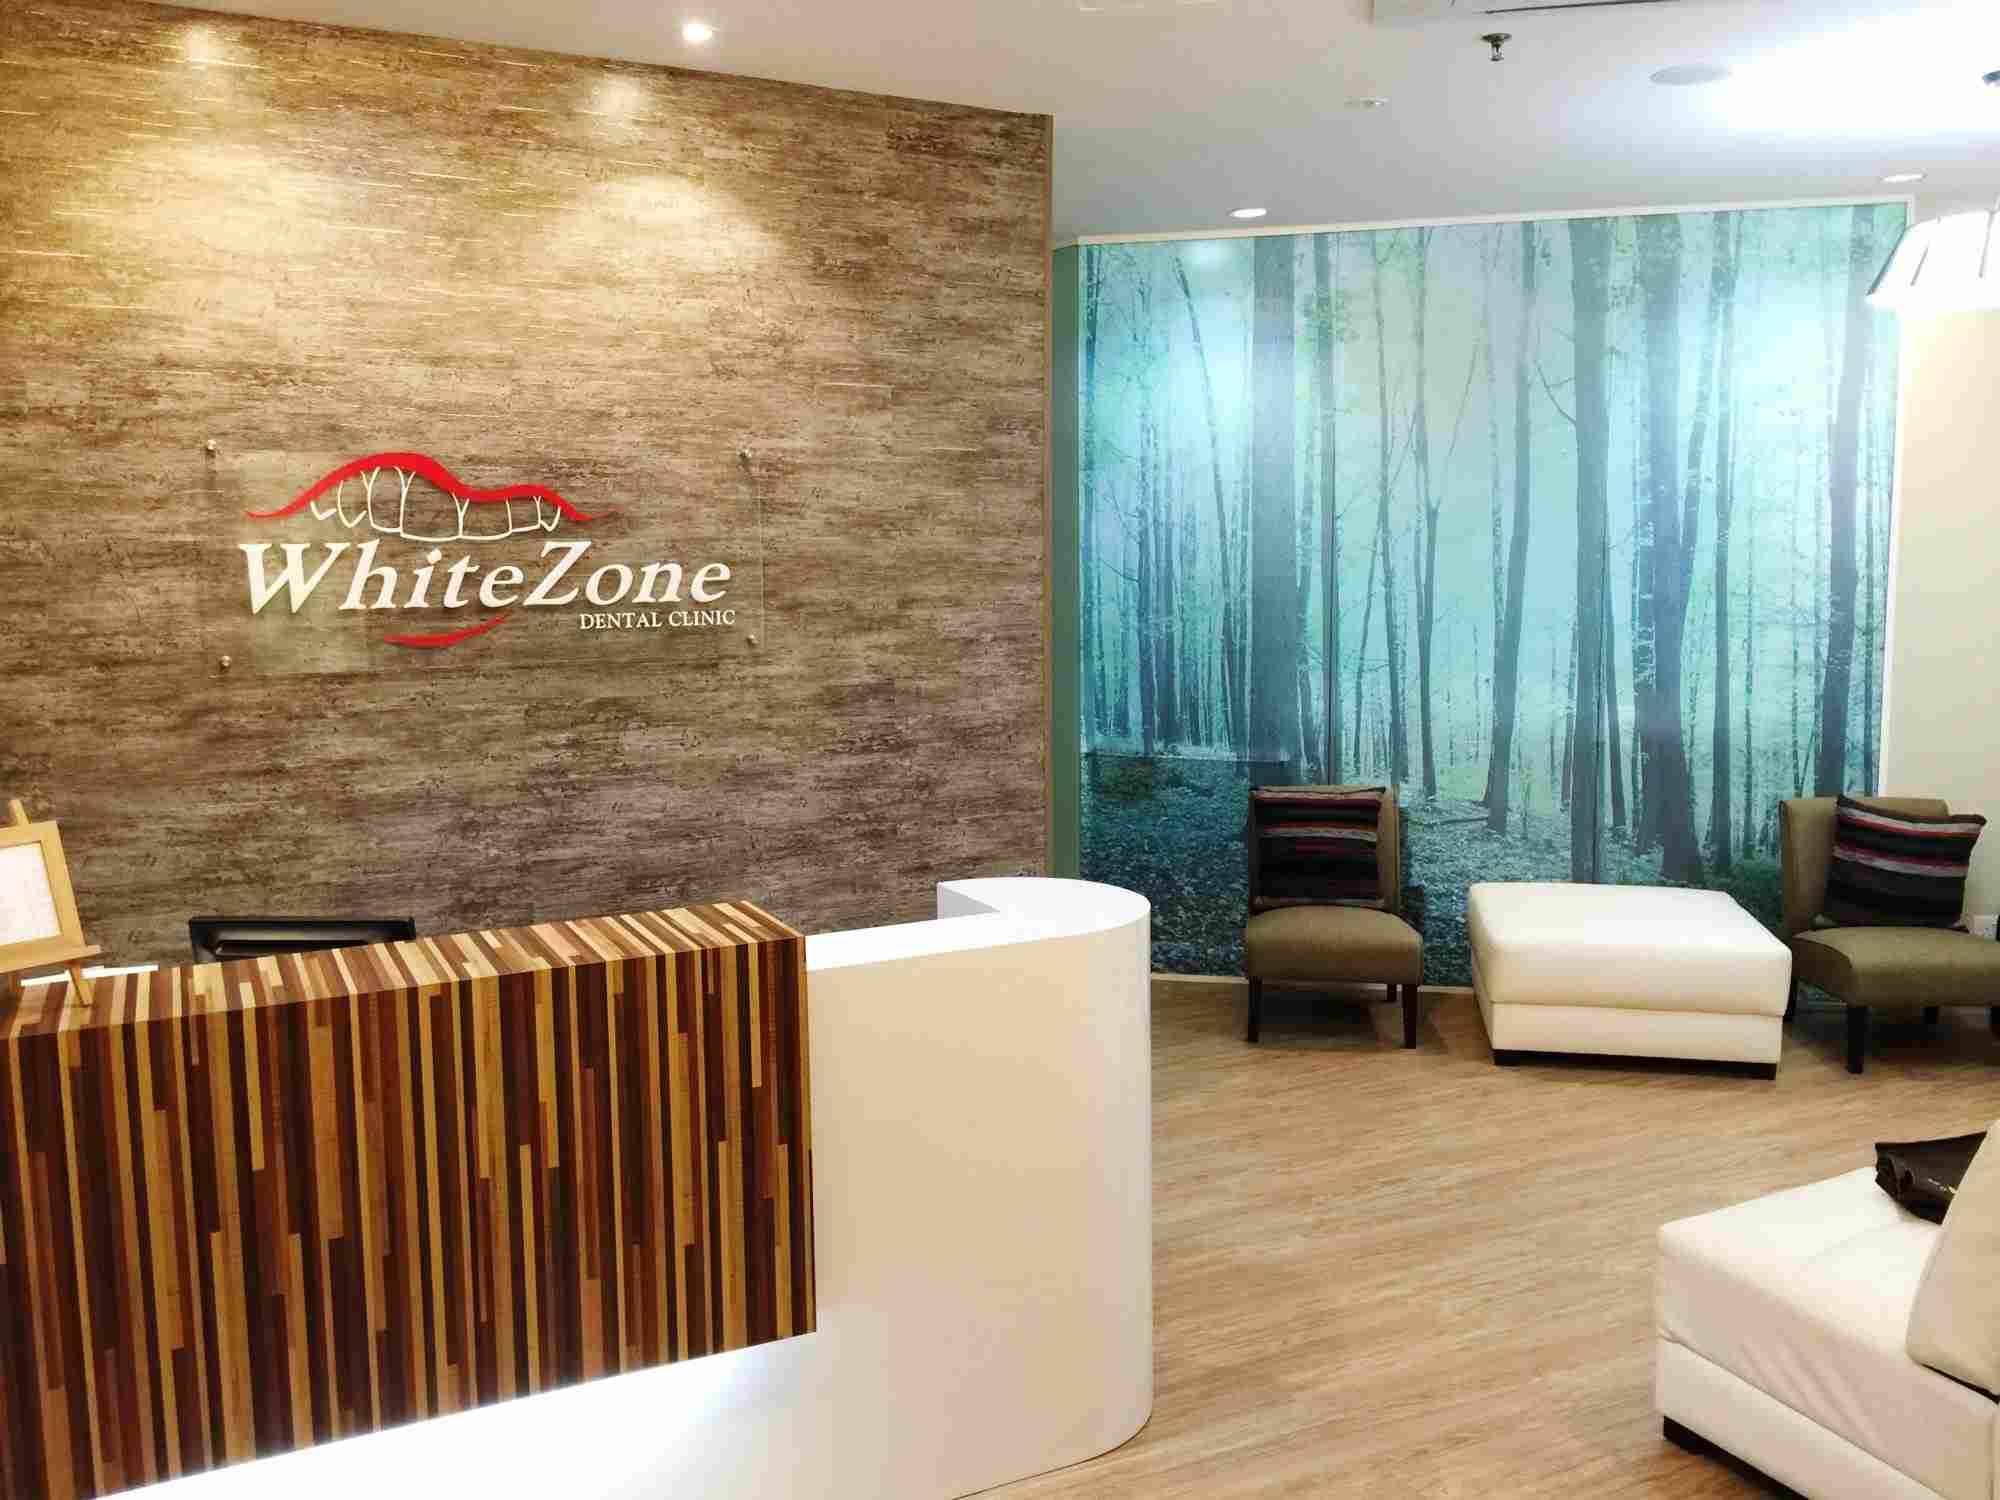 Whiten Zone Dental